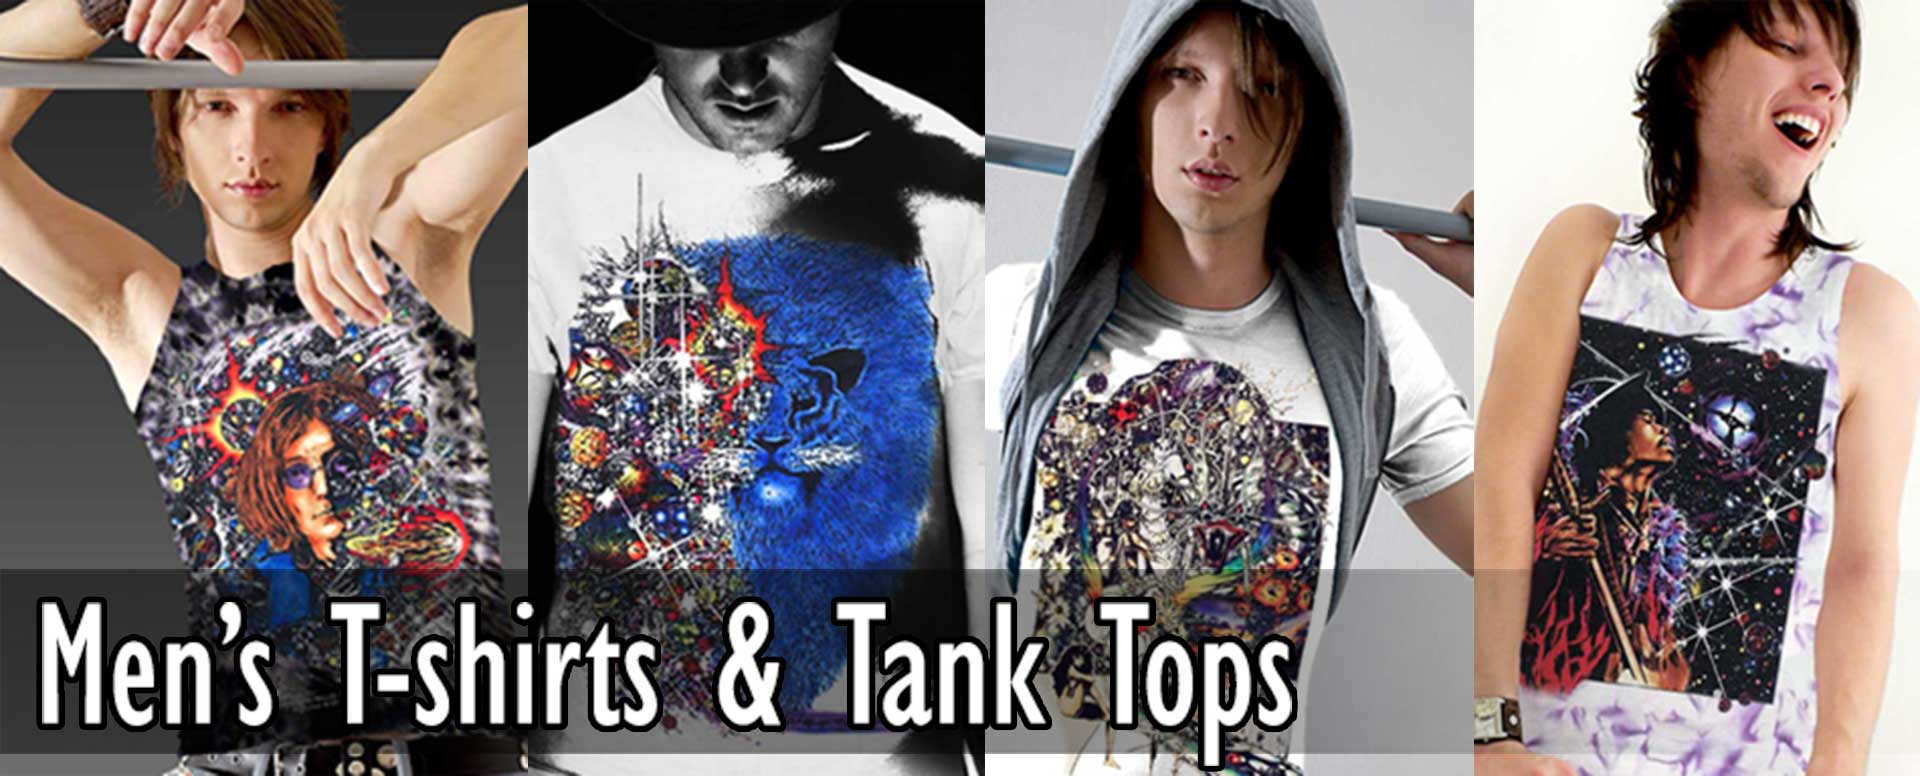 Men's T-shirts & Tank Tops